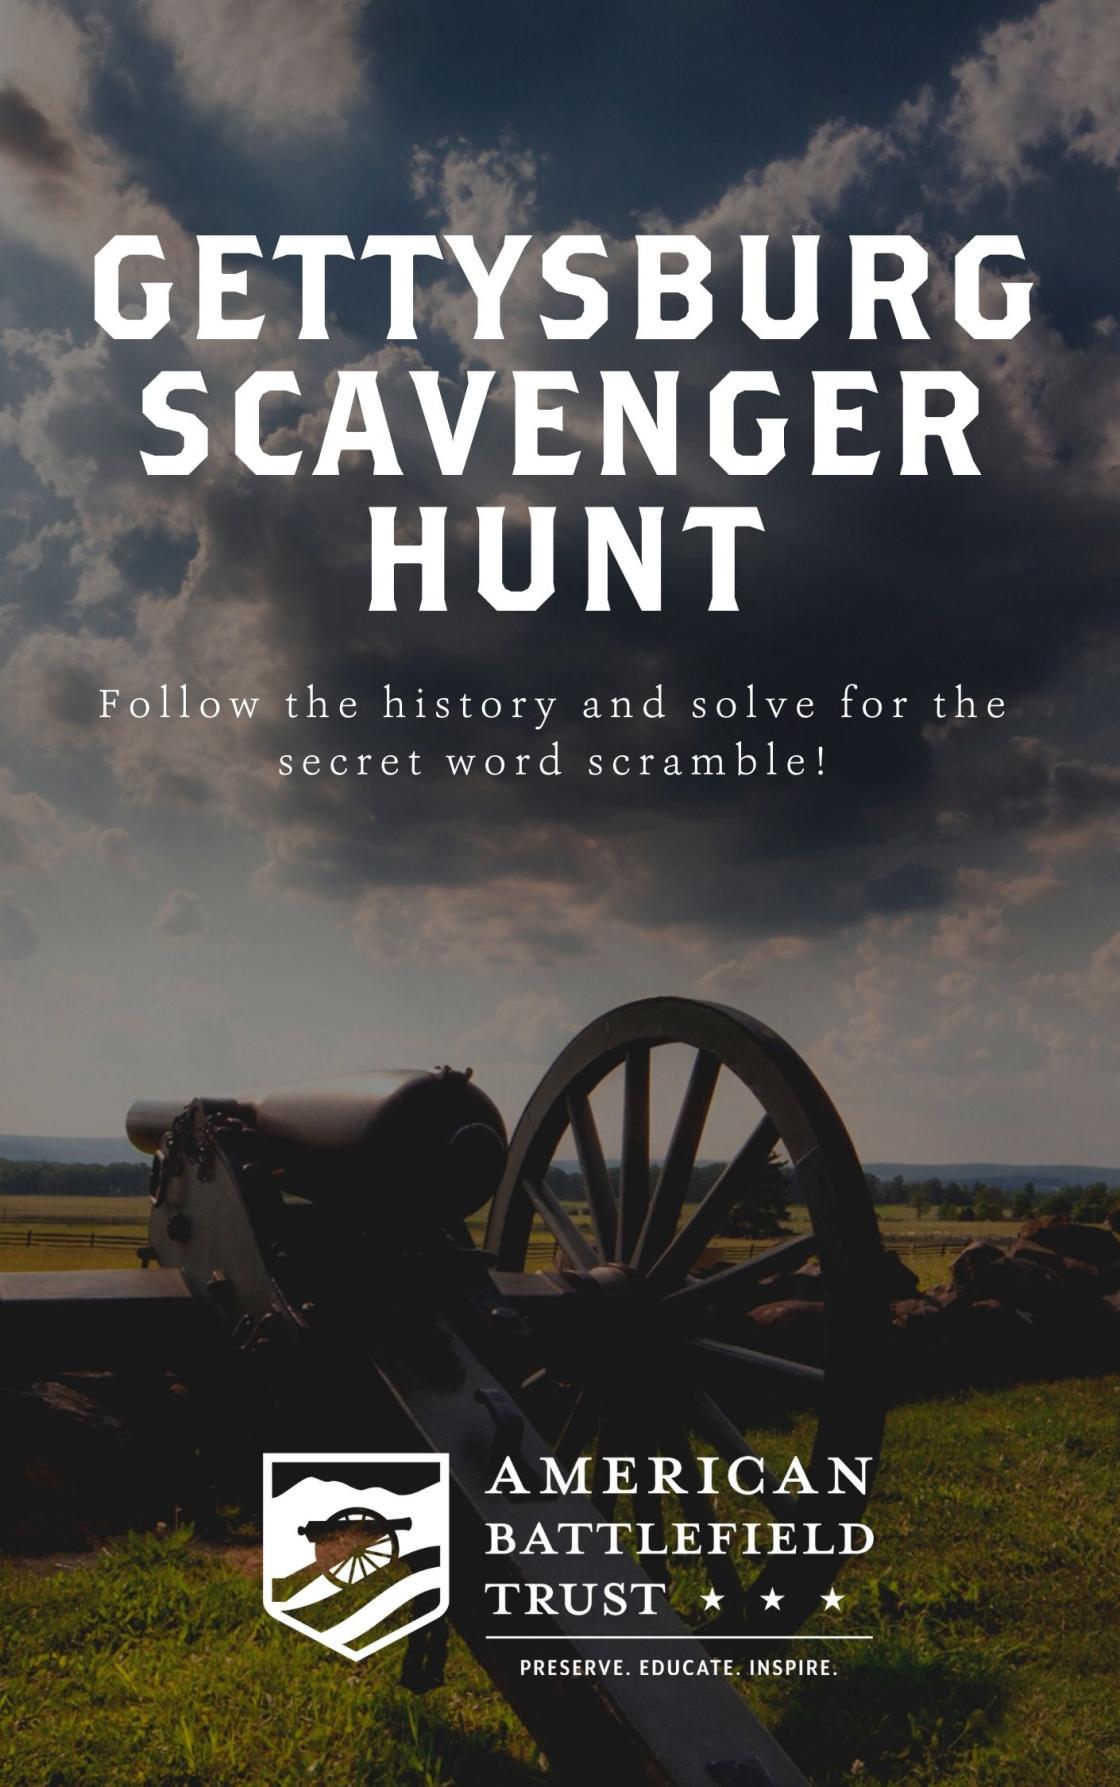 Gettysburg Audio Tour Scavenger Hunt Poster